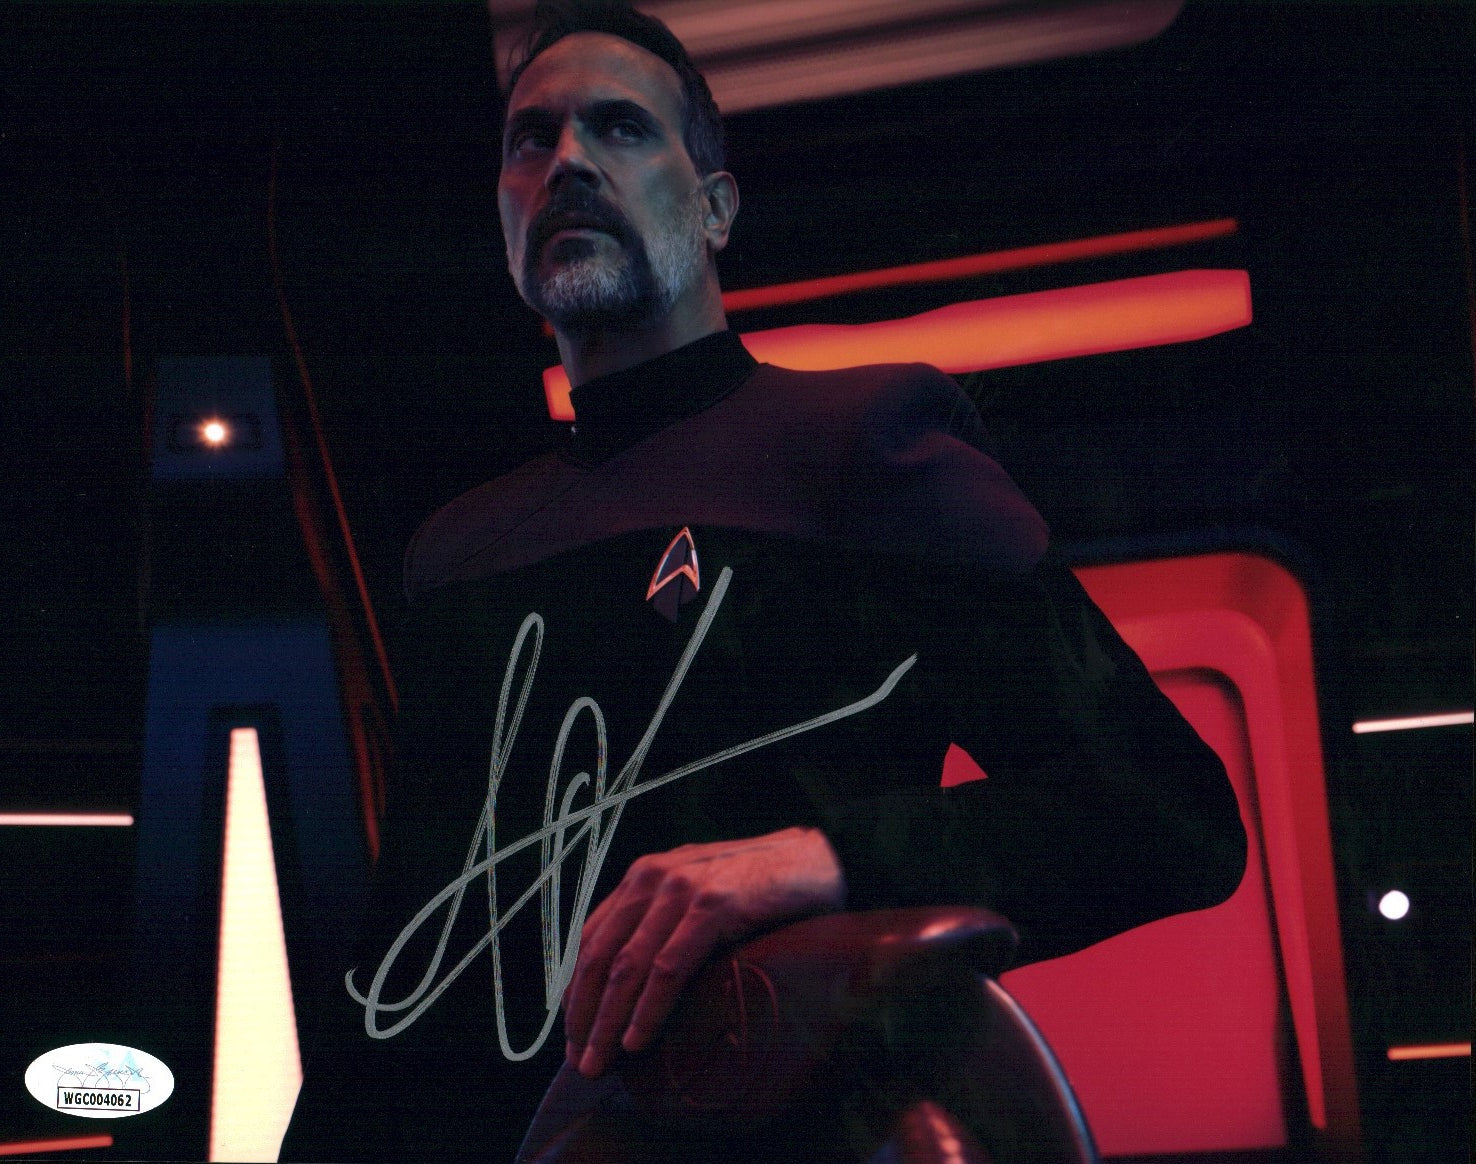 Todd Stashwick Star Trek: Picard 8x10 Signed Photo JSA Certified Autograph